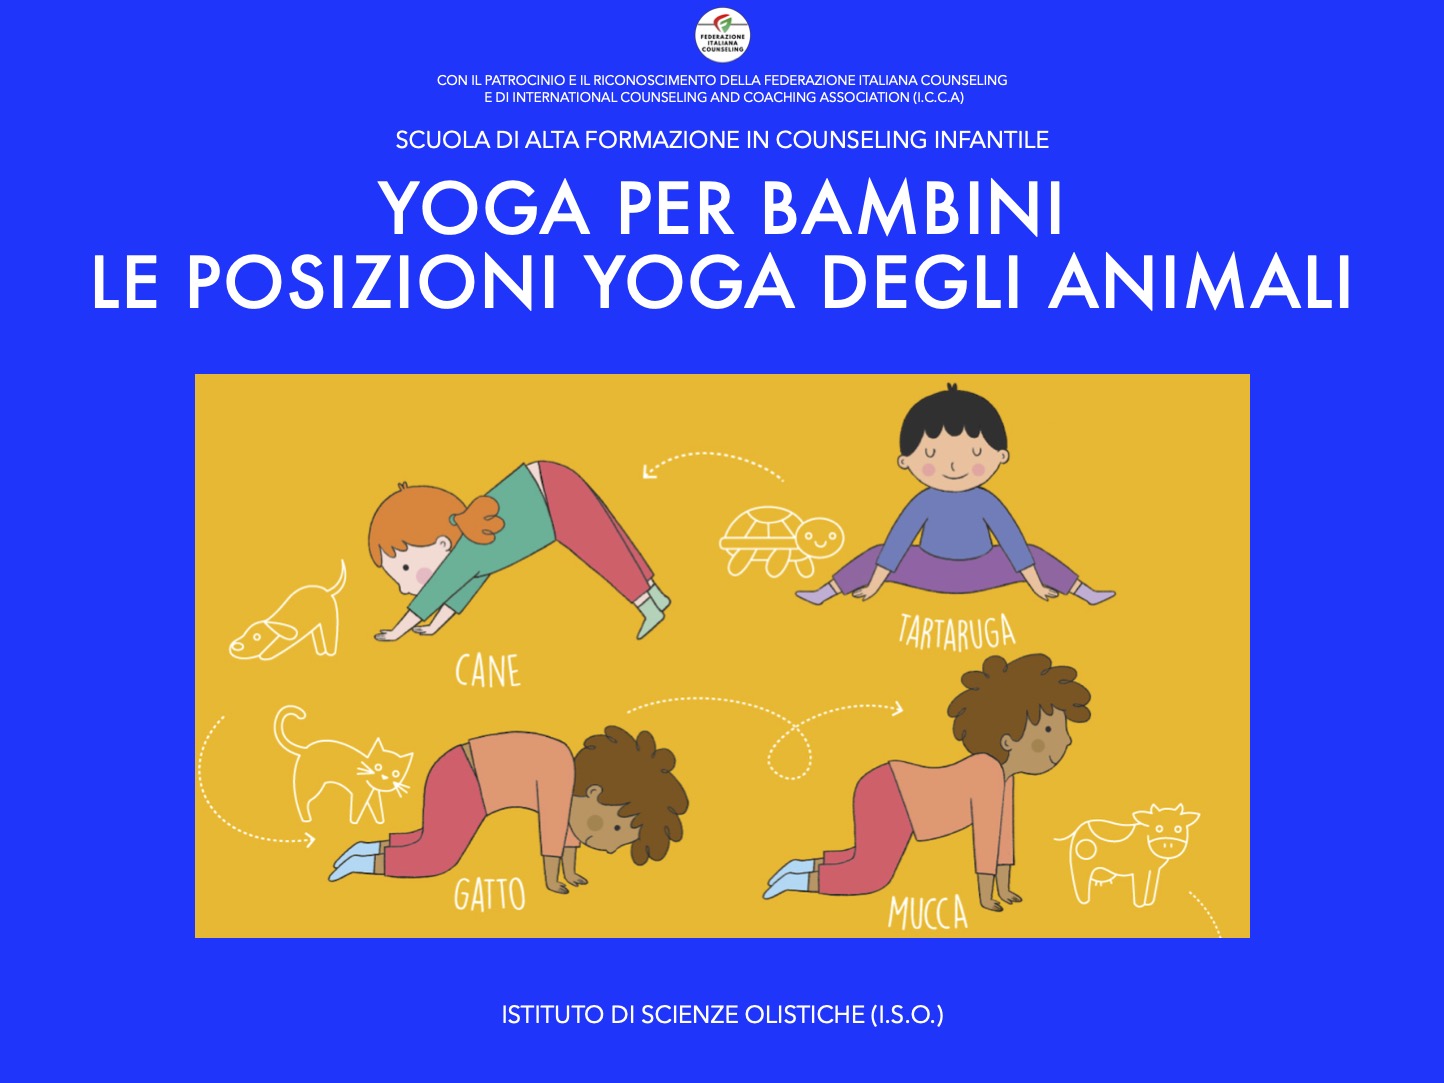 Le posizioni yoga degli animali